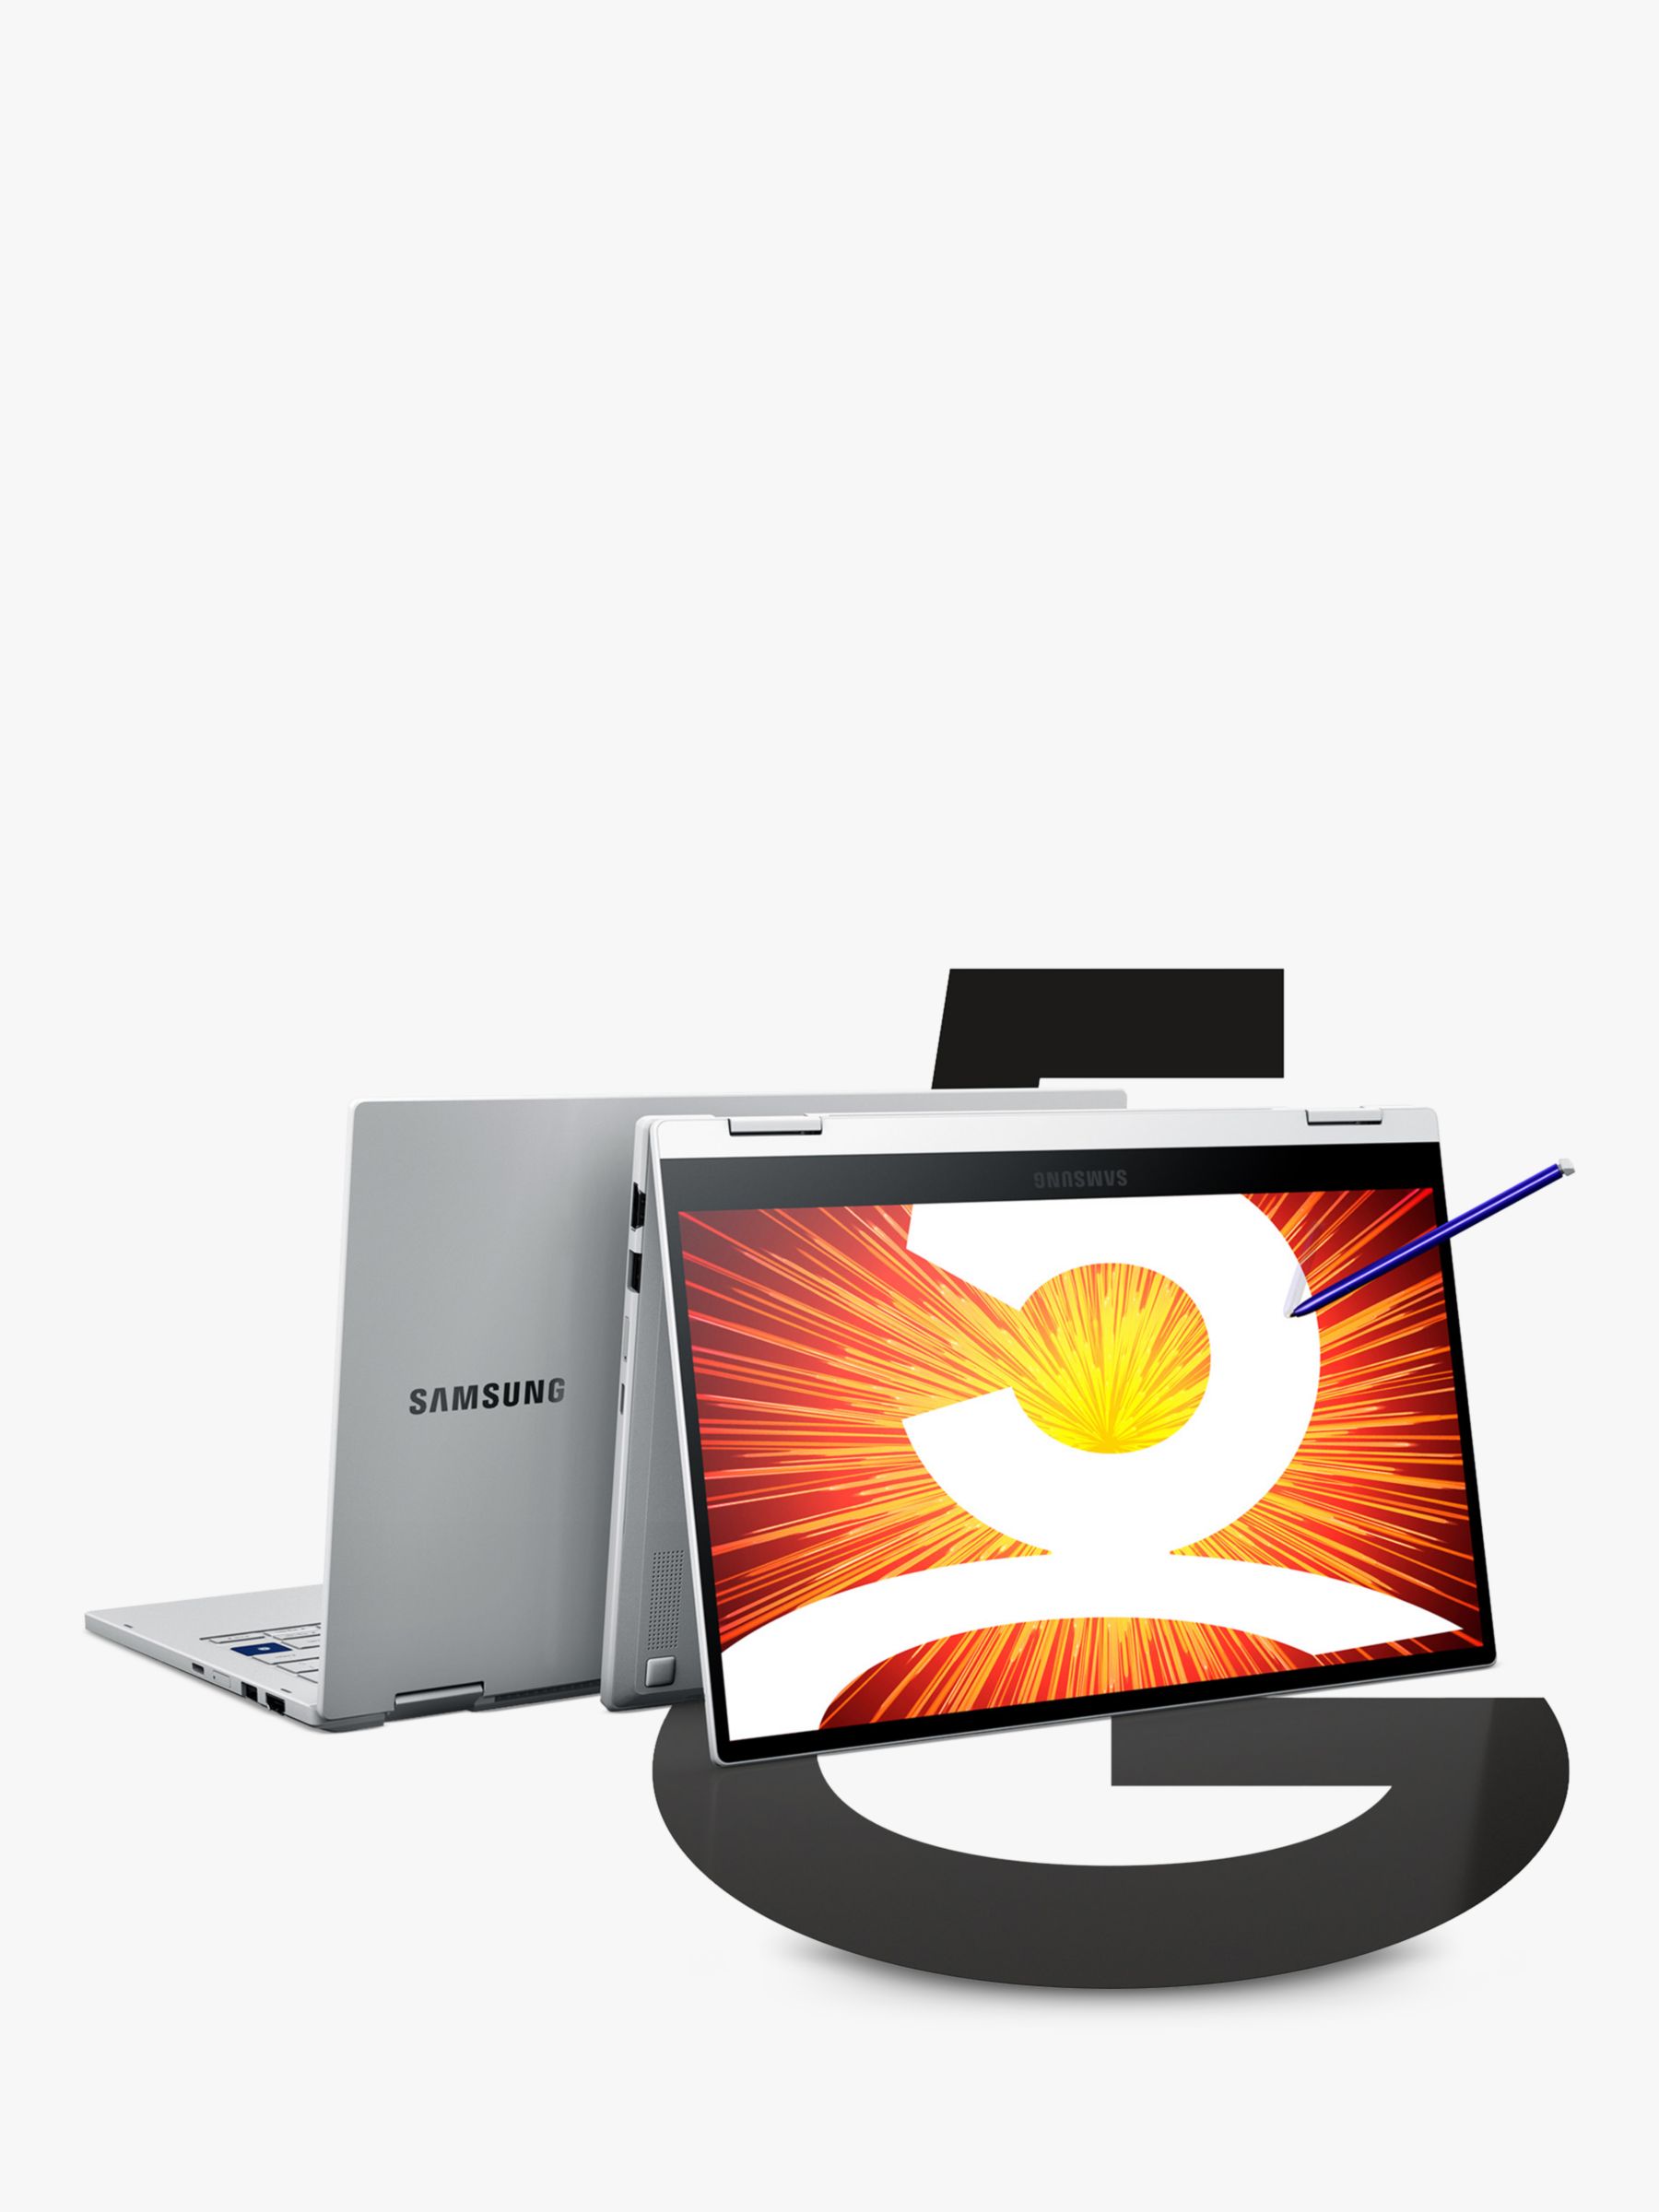 Samsung Galaxy Book Flex 2 5G Convertible Laptop, Intel Core i5 Processor, 8GB RAM, 256GB SSD, 13" Full HD, Royal Silver